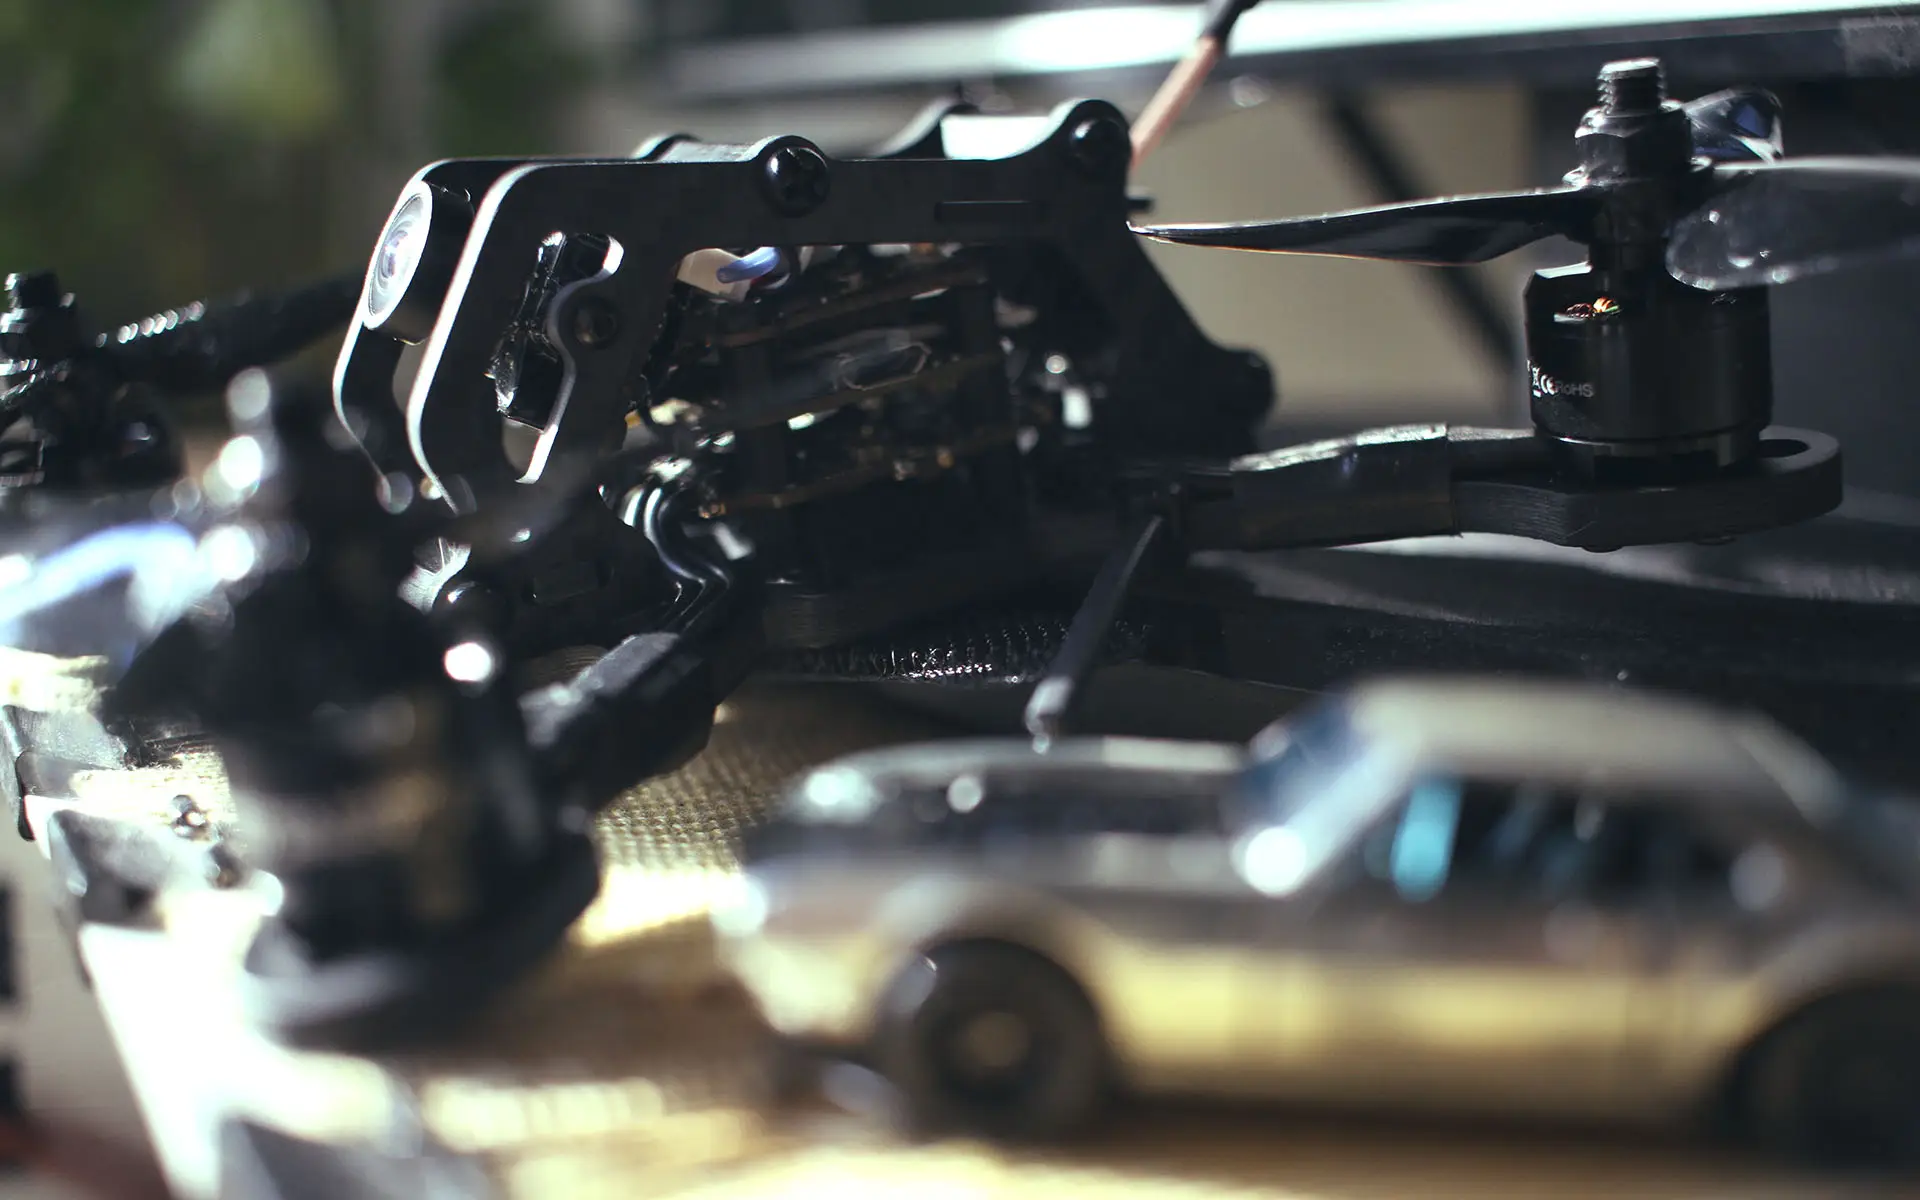 Closeup shot of a 3 fpv racing drone, side view.